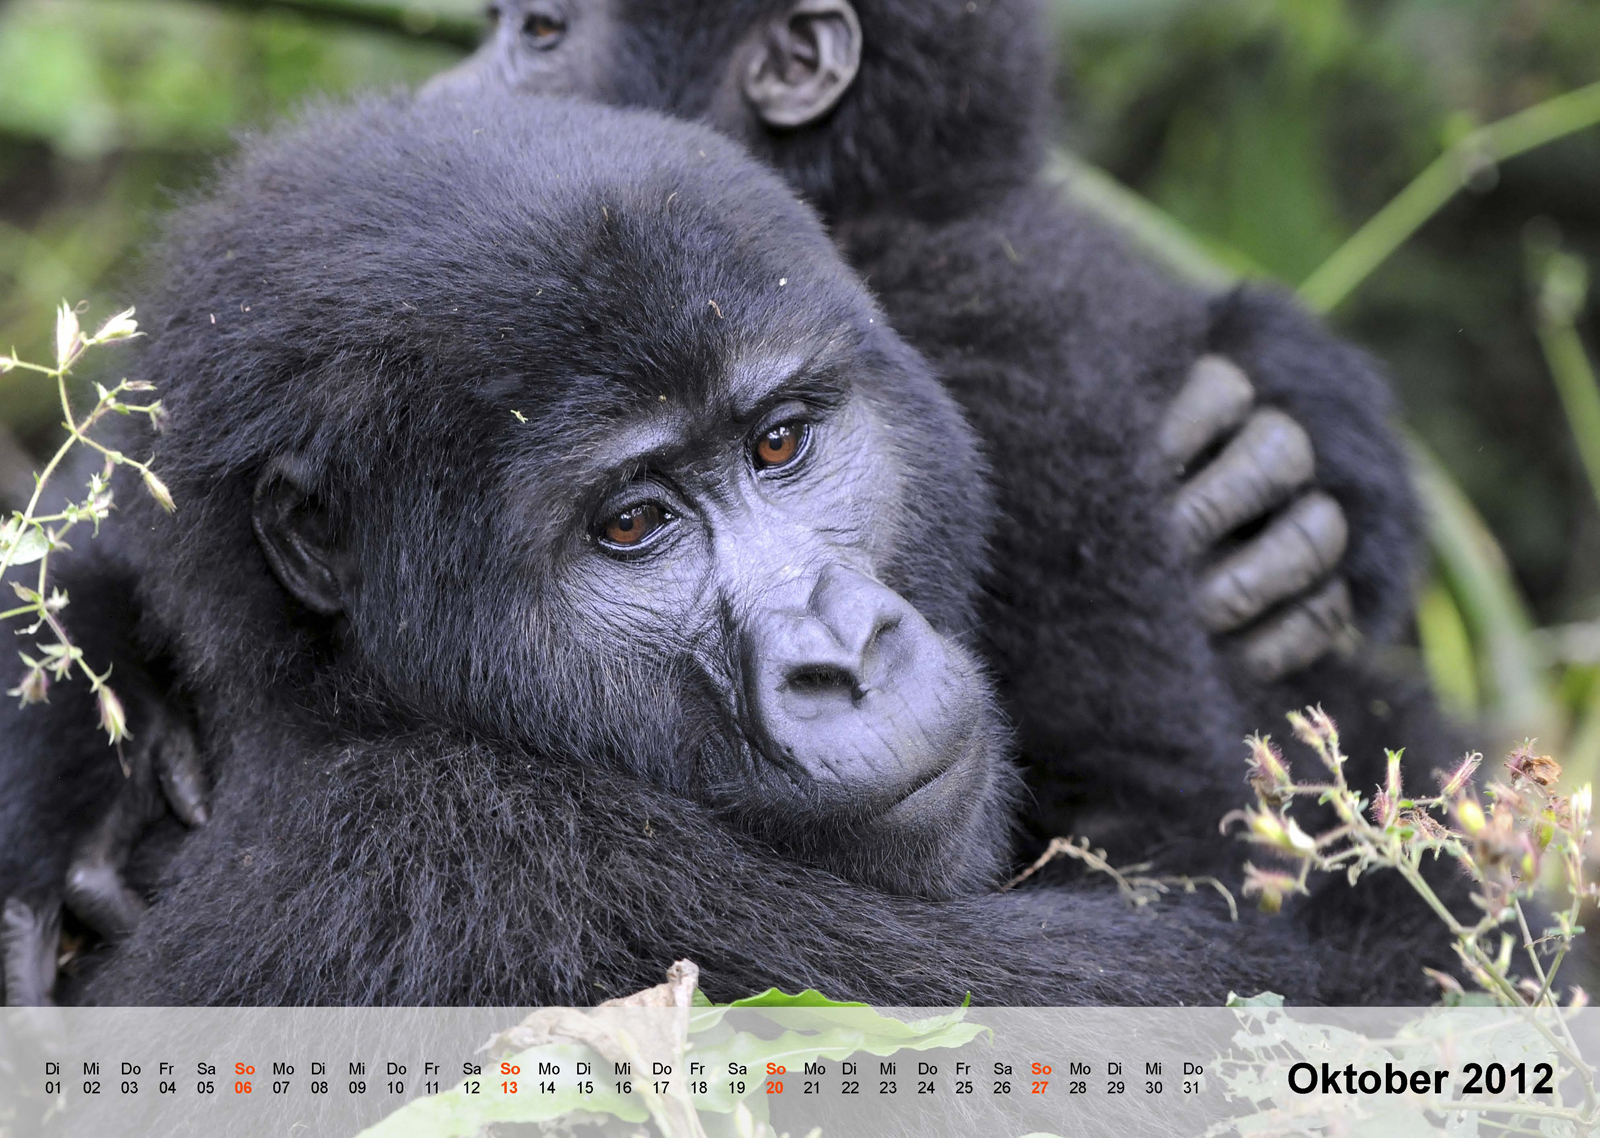 Berggorilla | Mountain gorilla | Bwindi Impenetrable National Park | Uganda - Kalender 2012 - Oktober